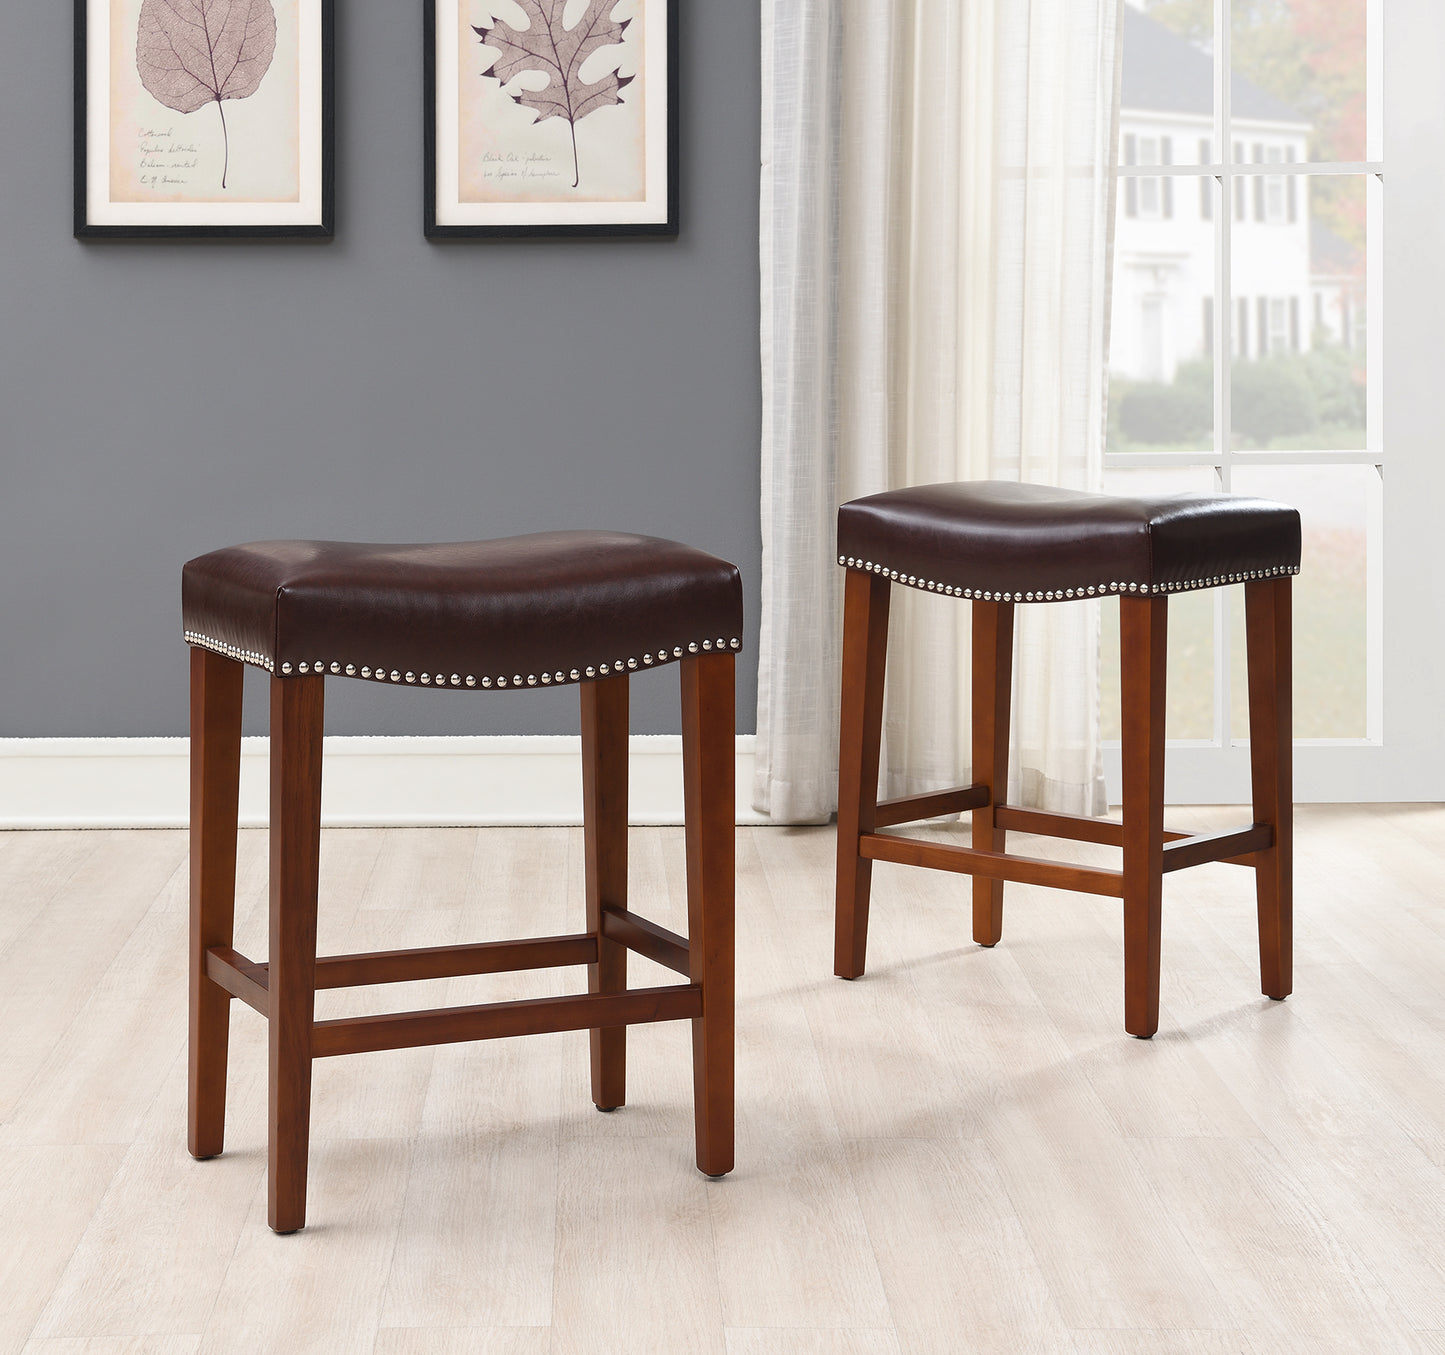 Dark Brown Leather Barstool Chair 2 pcs Set